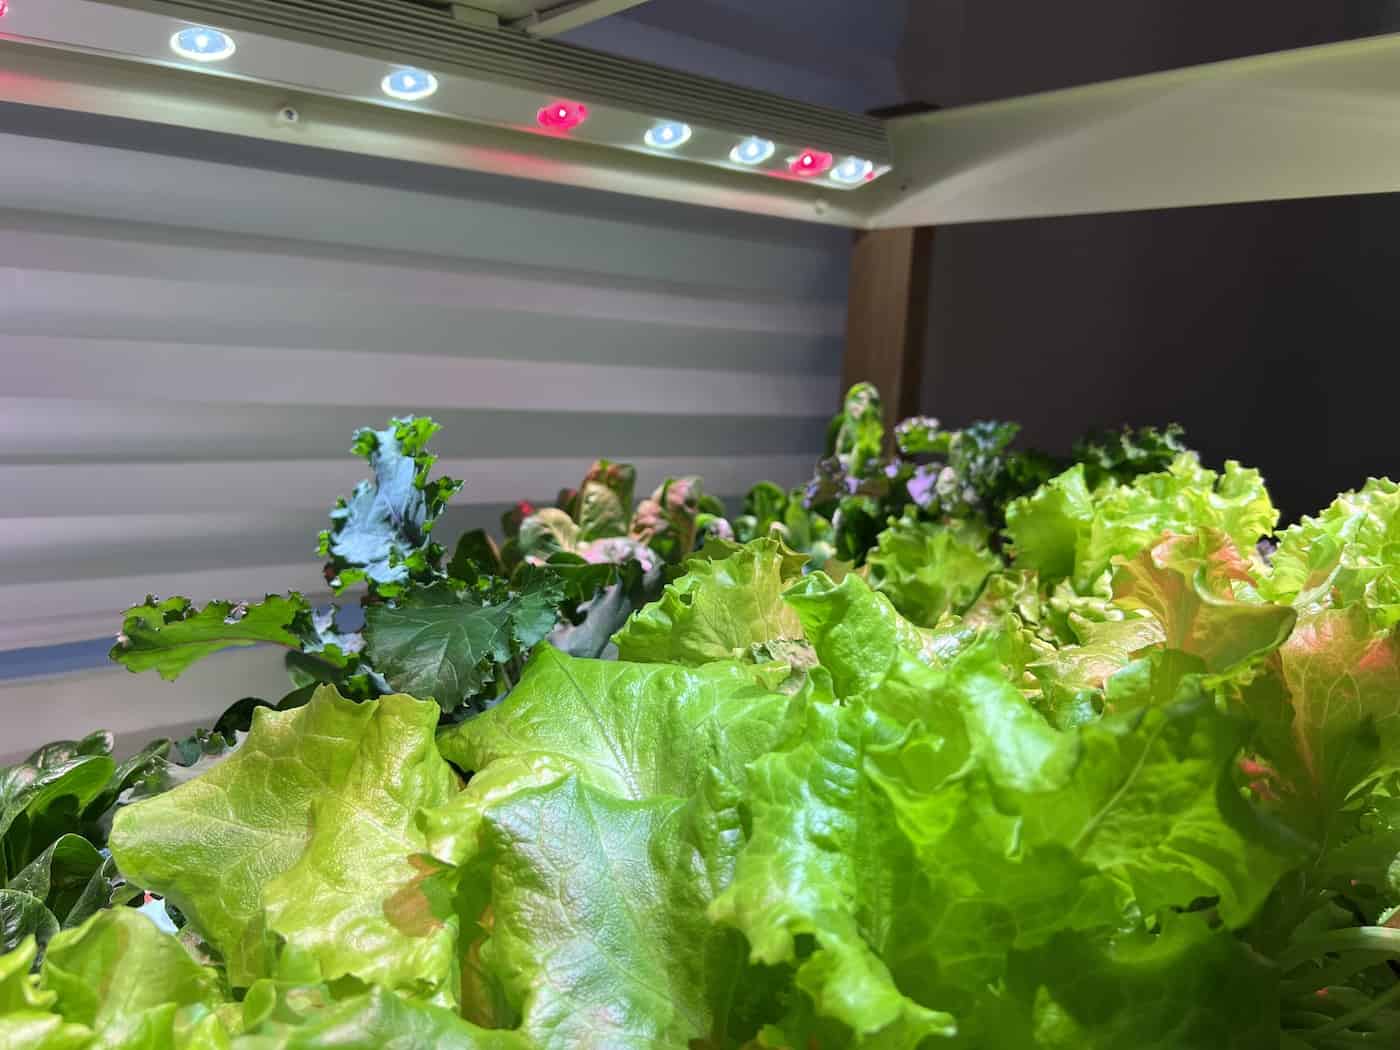 Lettuce growing indoors under grow lights